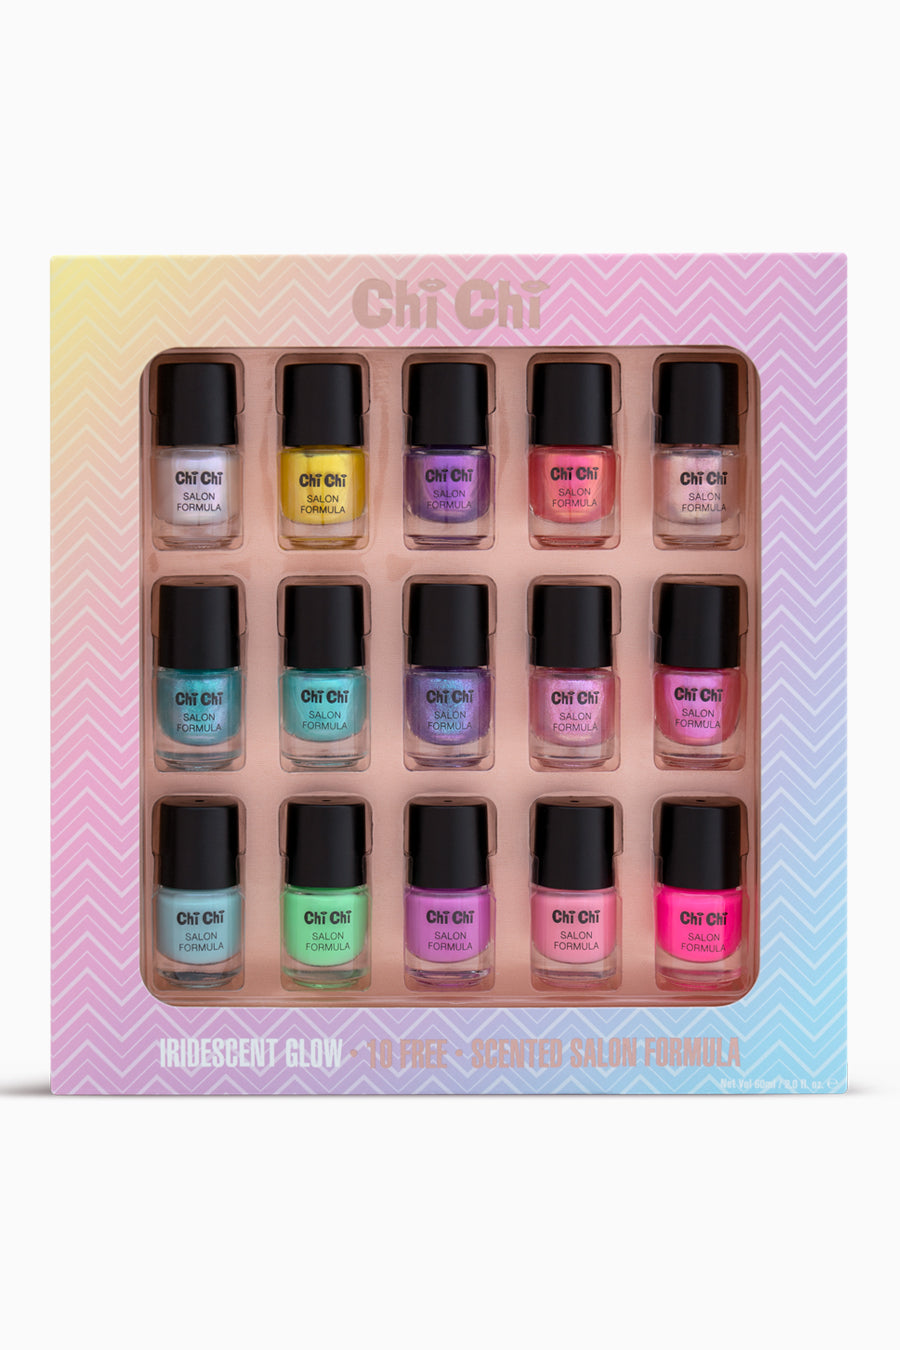 iridescent-glow-salon-formula-nail-set